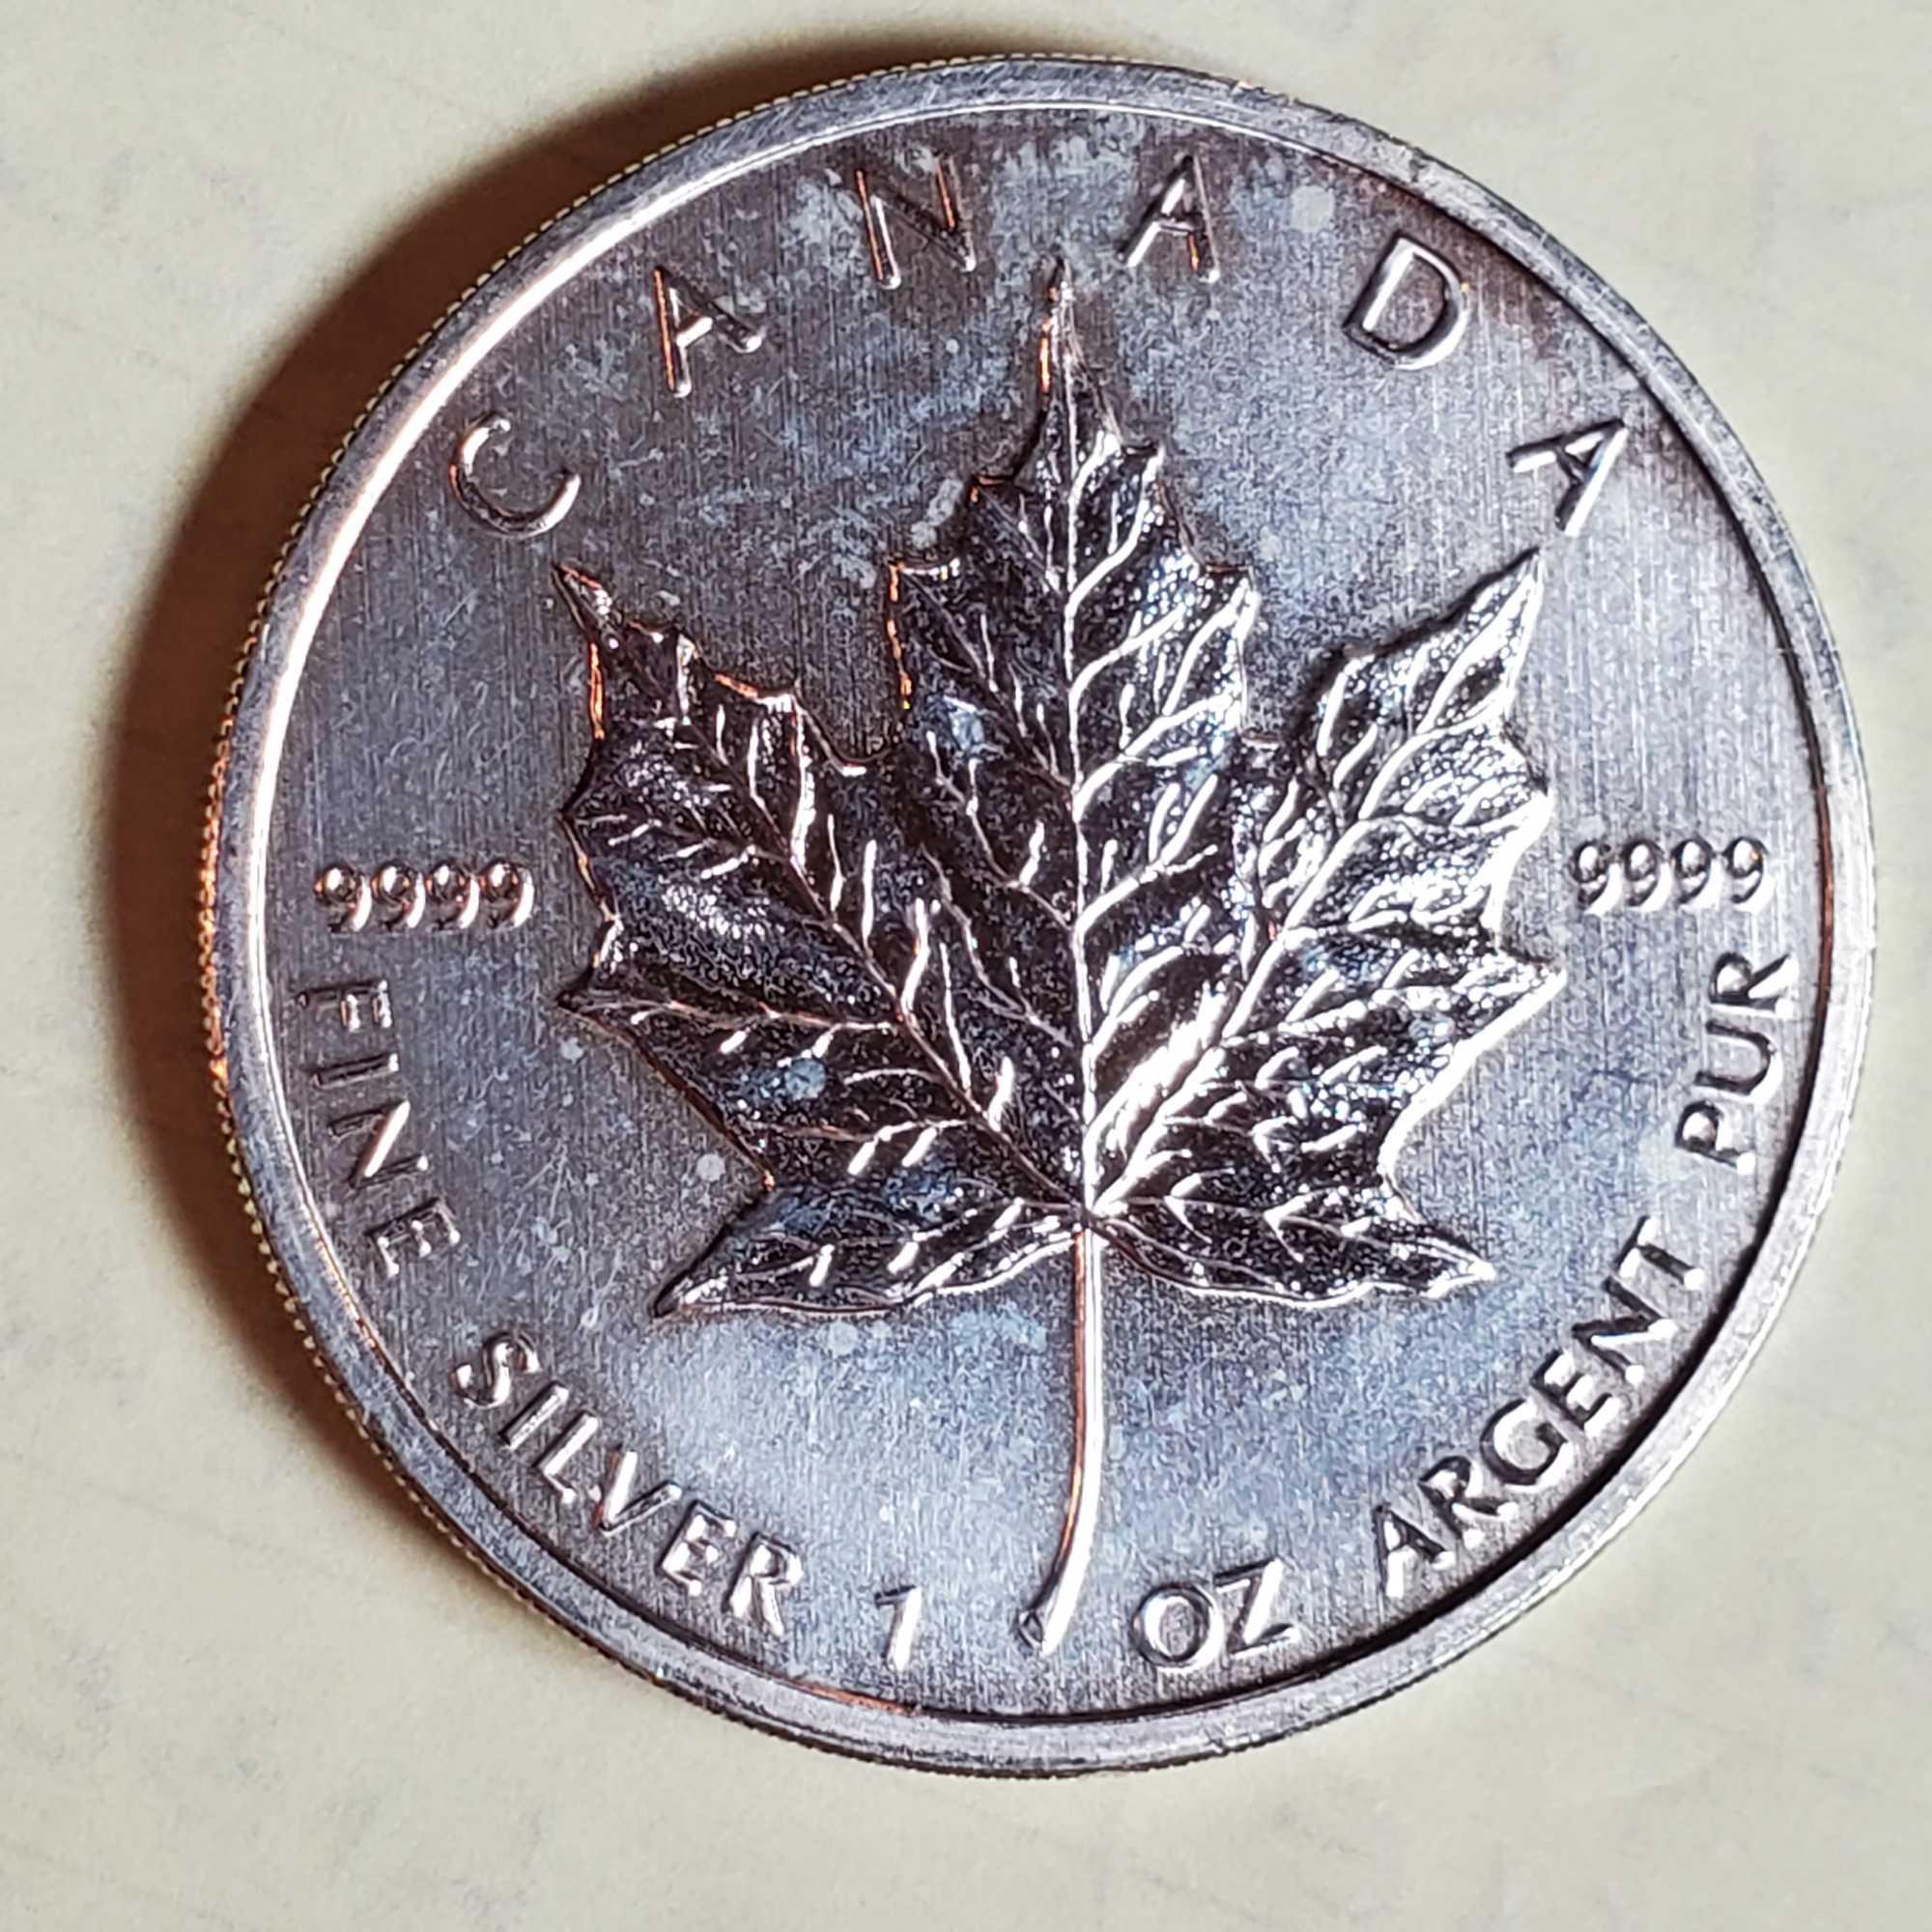 4 1 Oz .999 Silver Bullion Coins - 2015 & 2016 Silver Eagles, 2011 Maple Leaf and 2023 Libertad